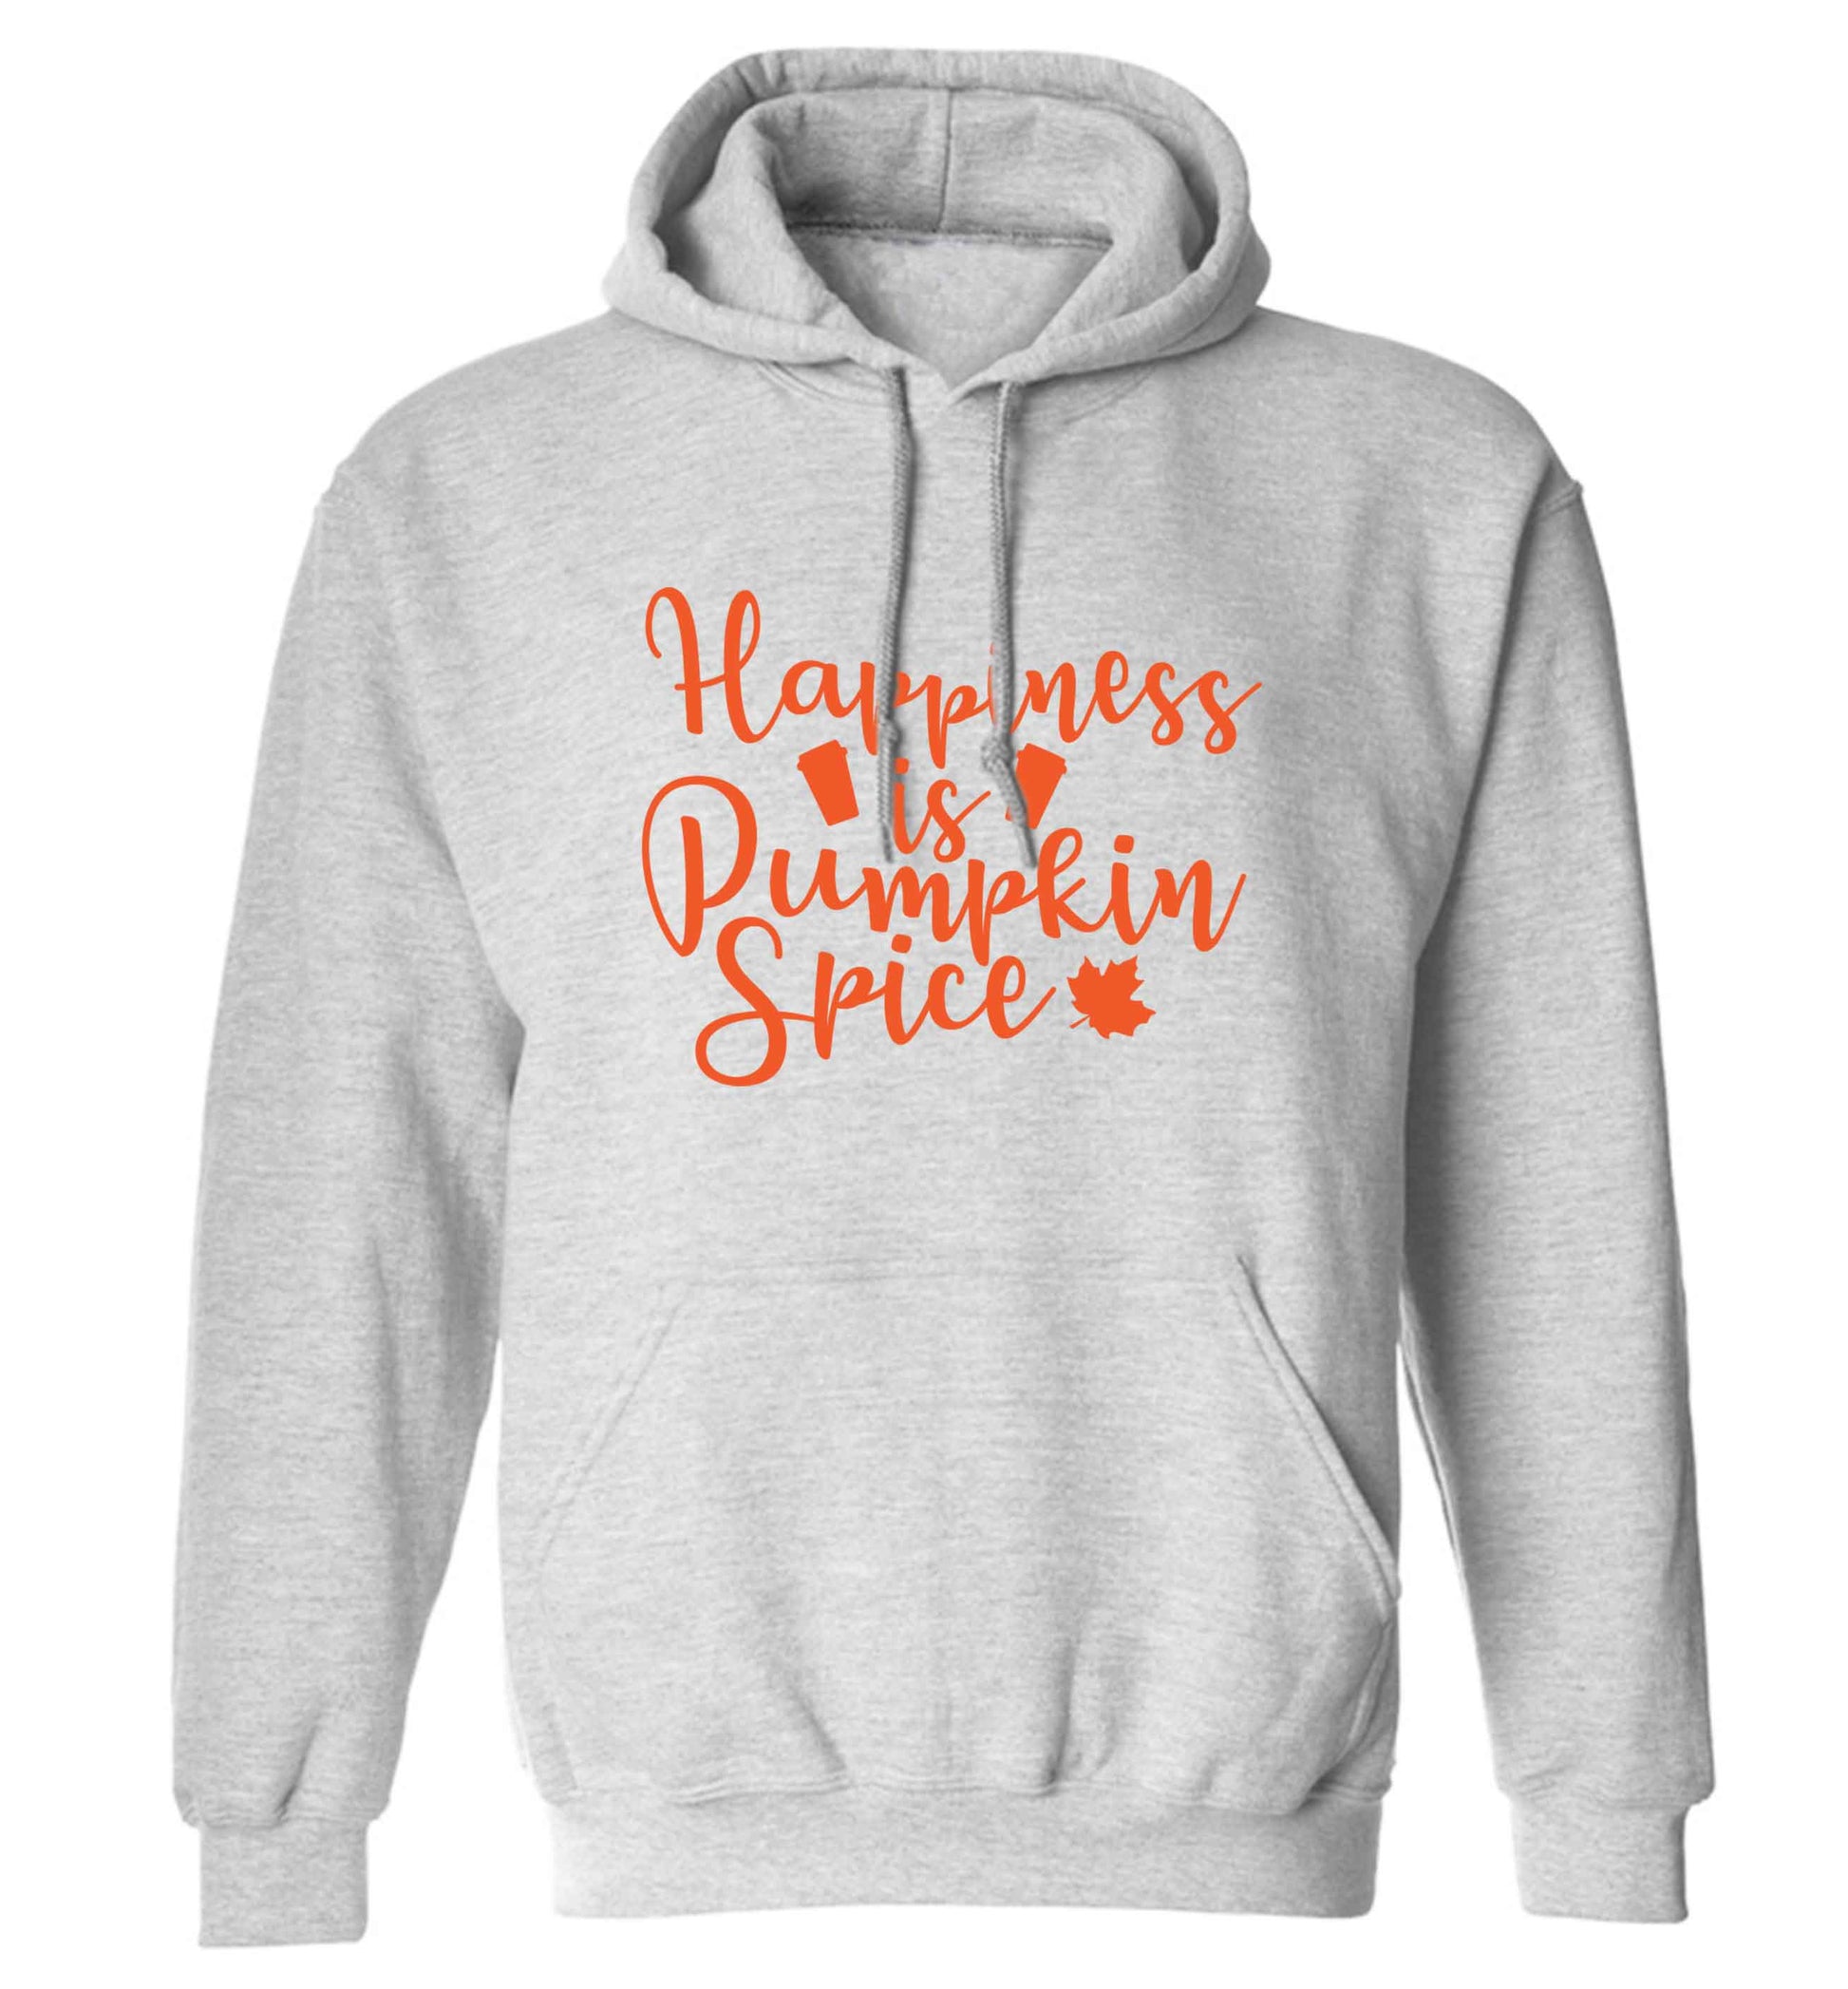 Happiness Pumpkin Spice adults unisex grey hoodie 2XL